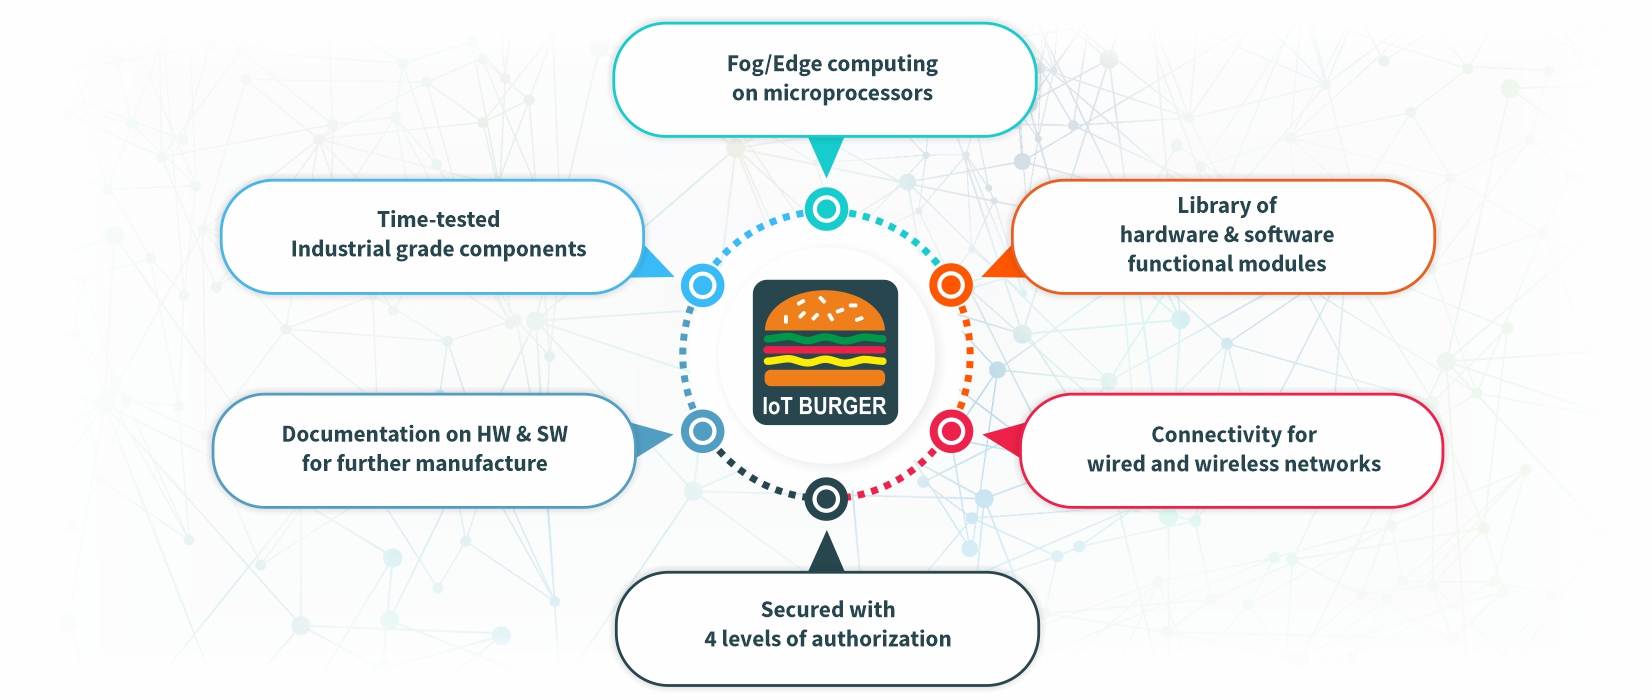 IoT Burger technology from Technoton Engineering